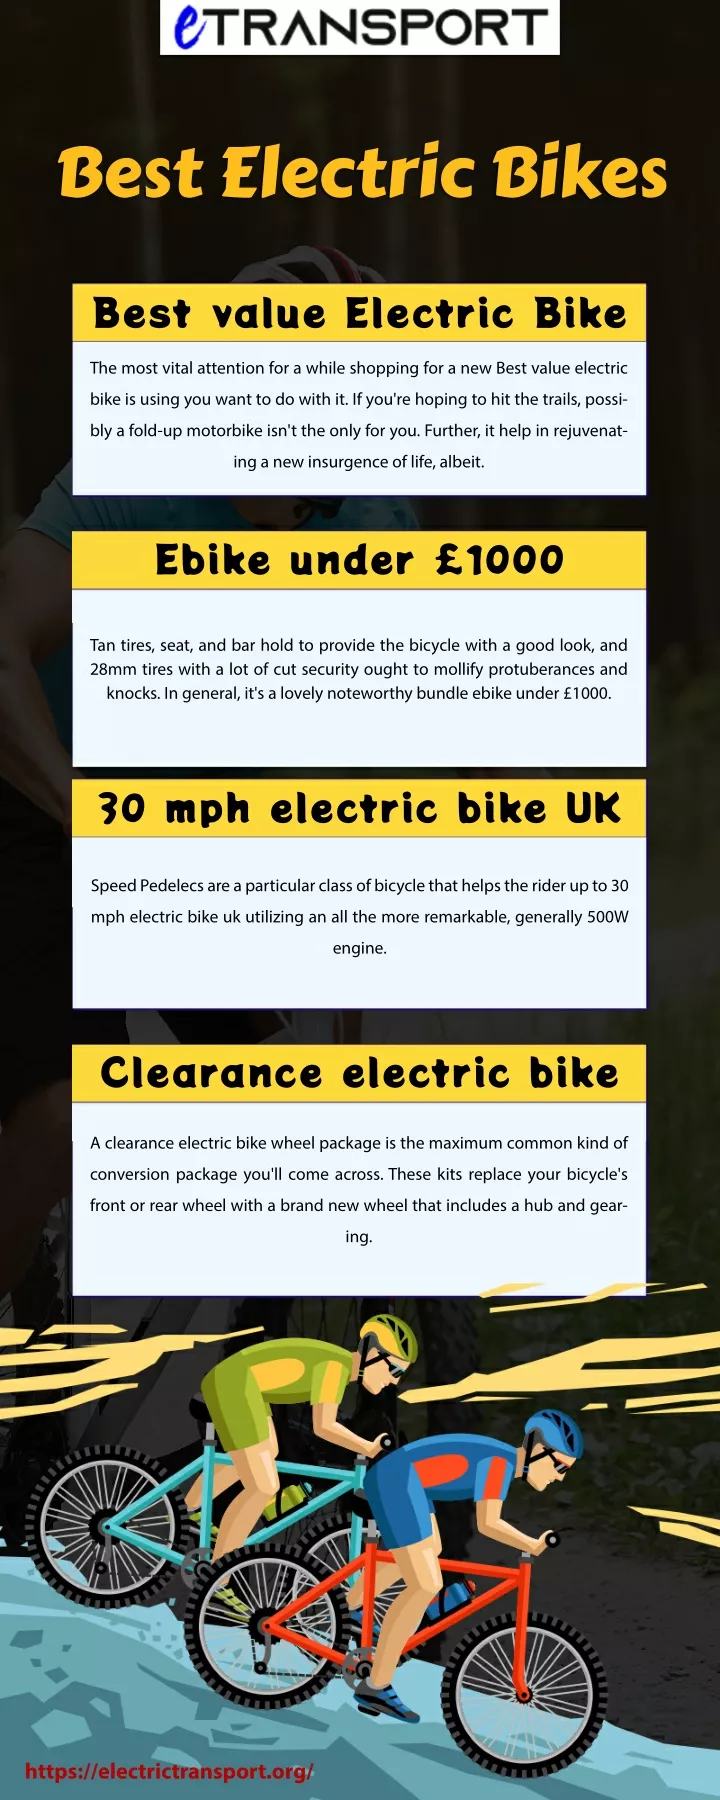 best electric bikes